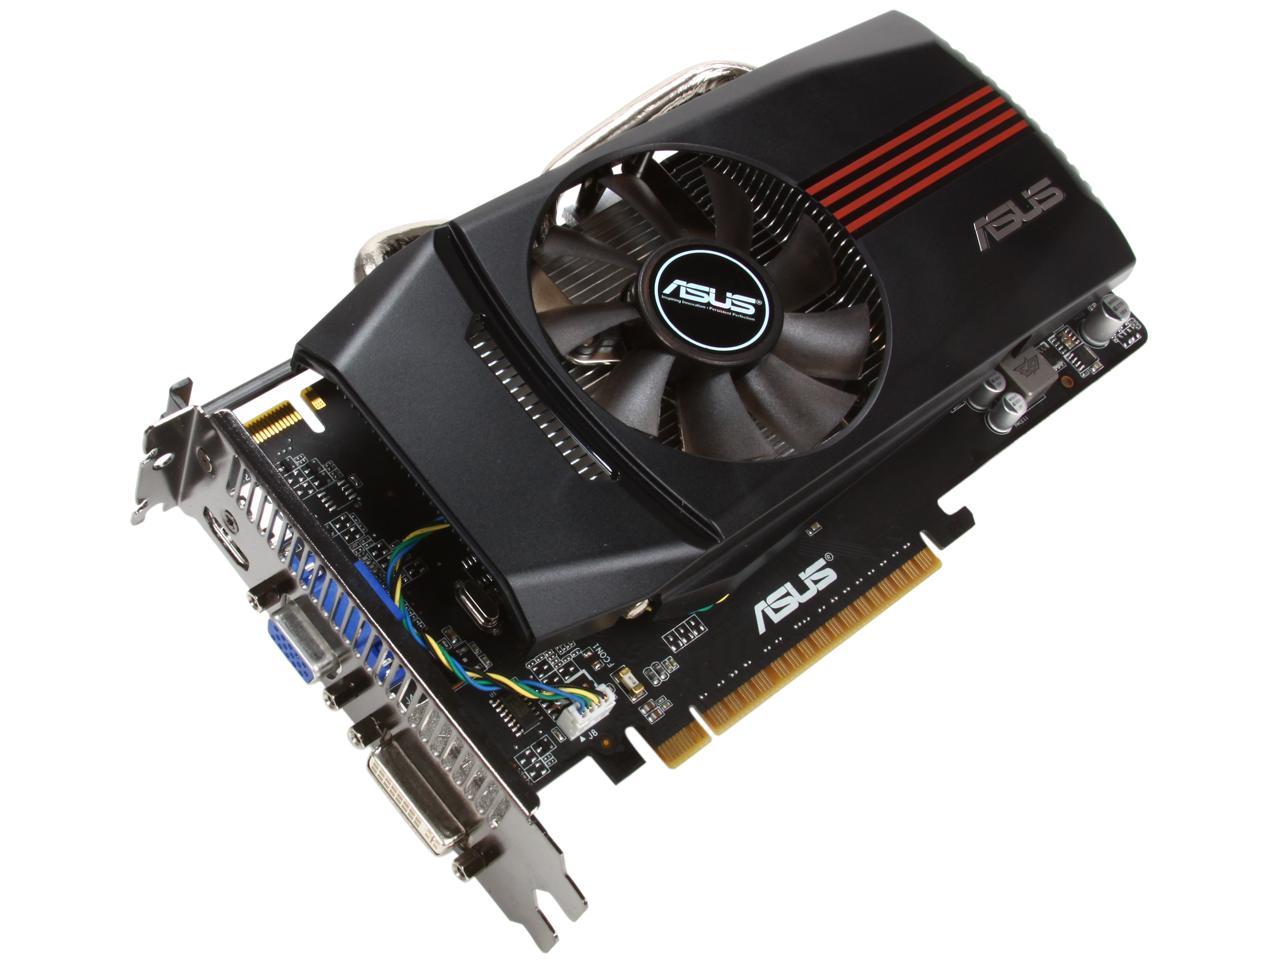 ASUS GeForce GTX 550 Ti (Fermi) DirectX 